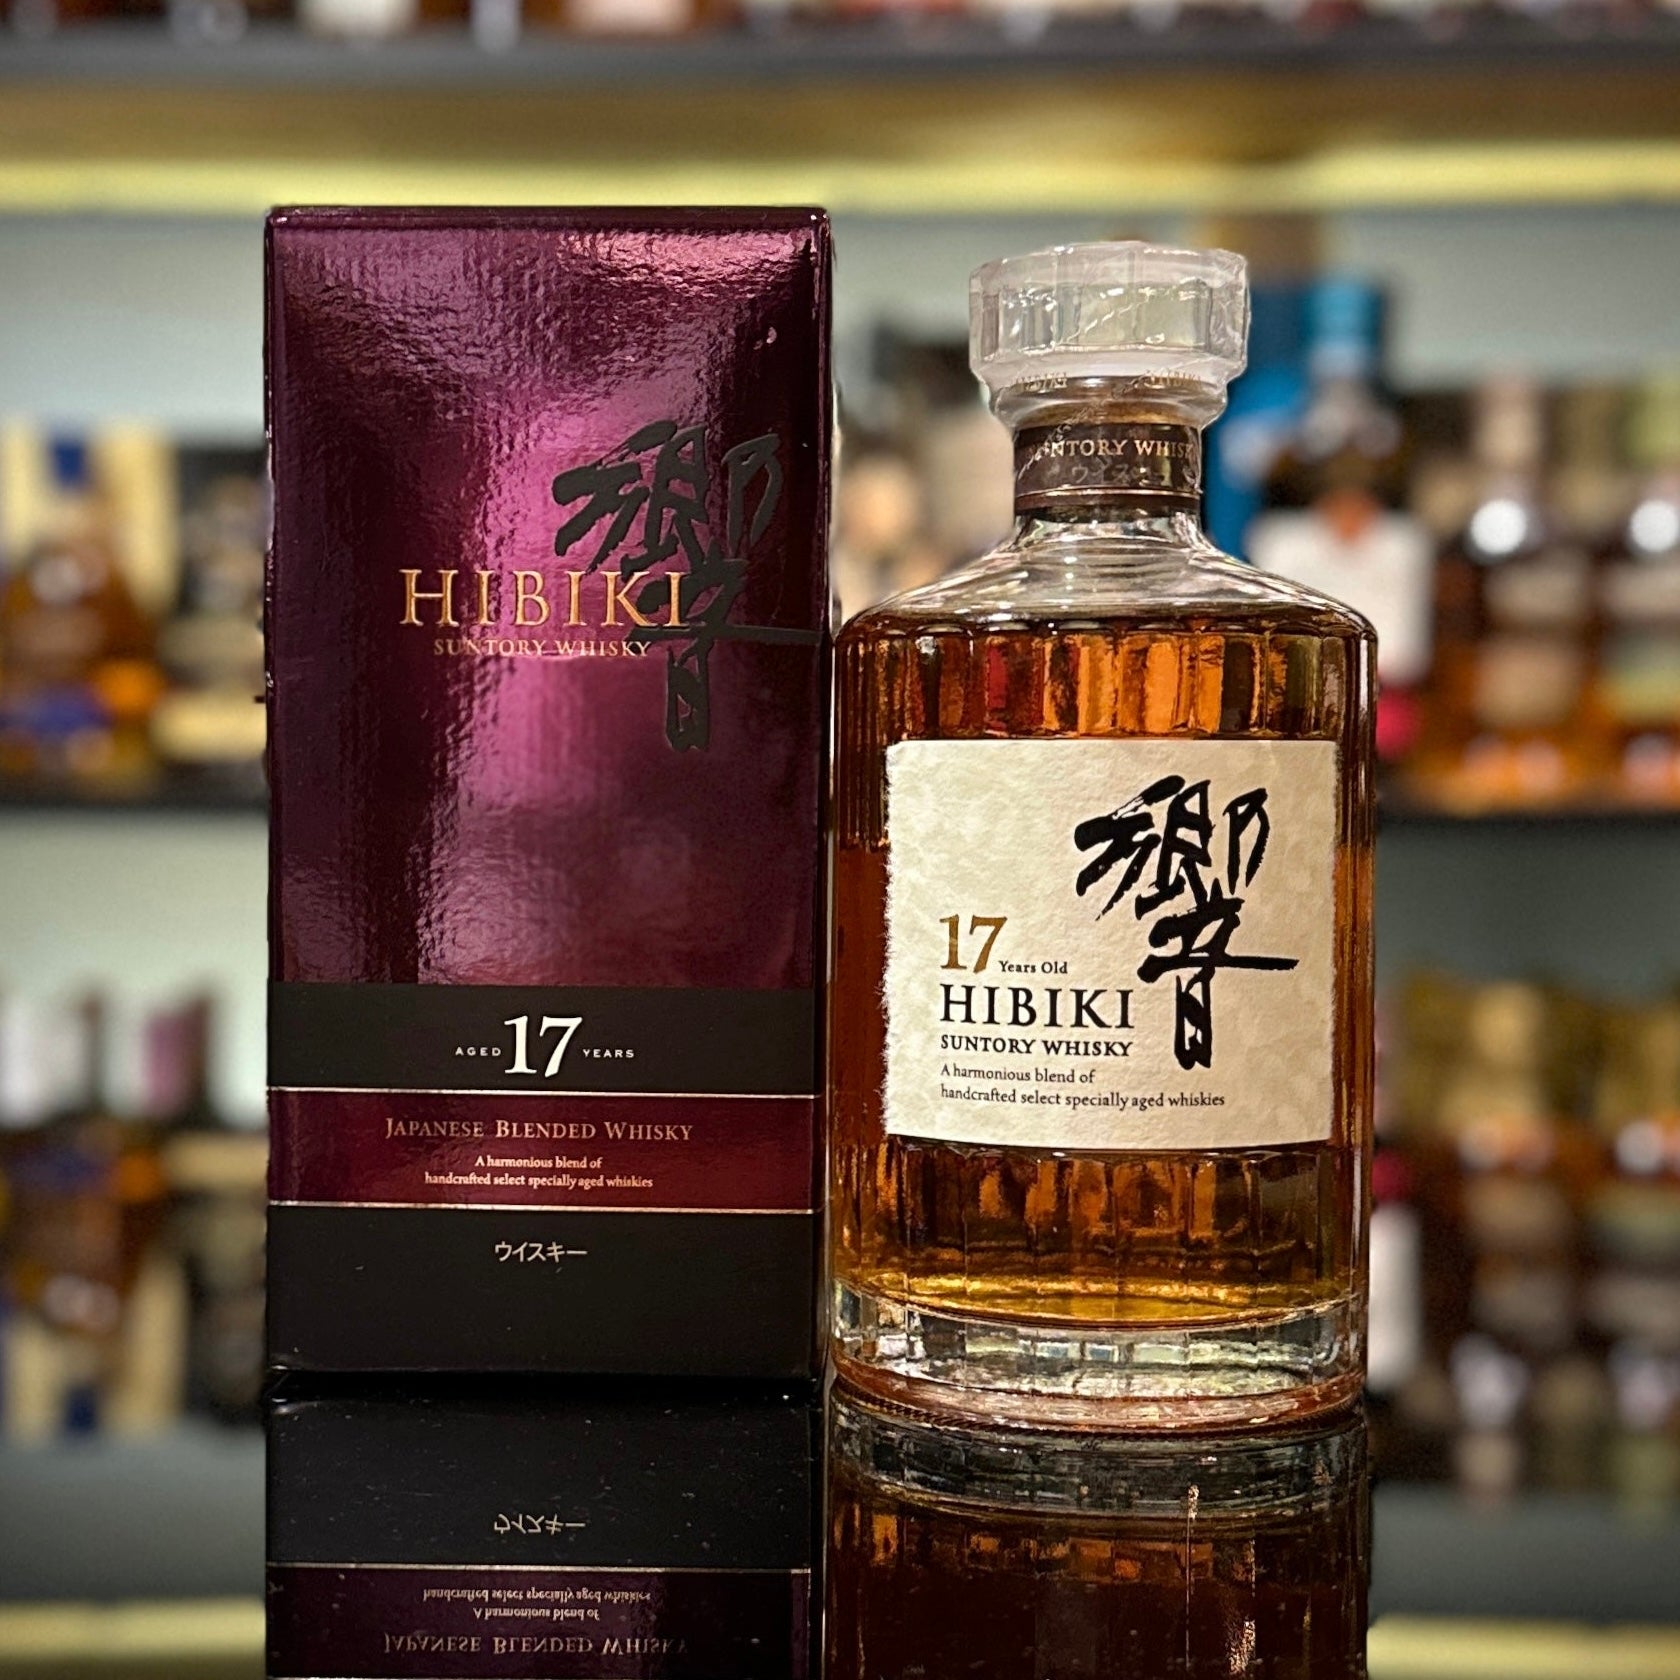 響17年日本調和威士忌– The Central Whisky